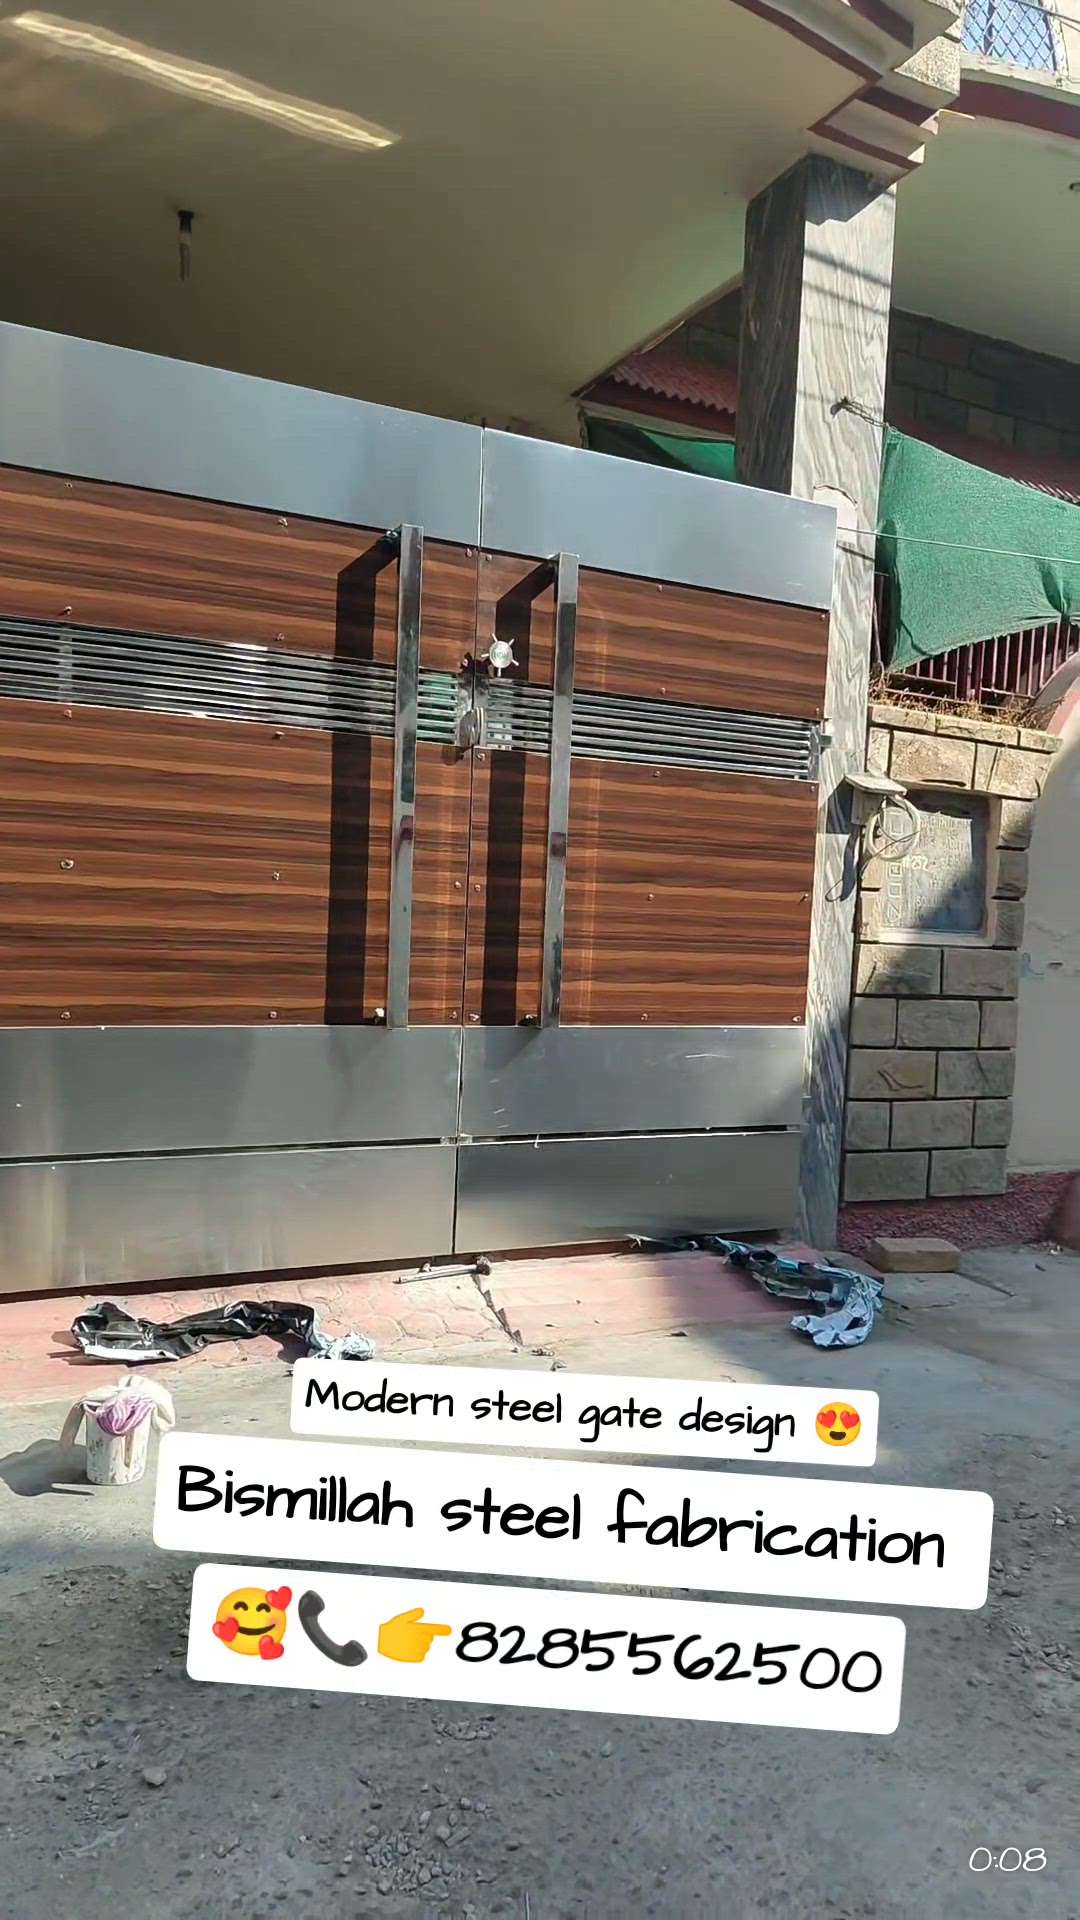 modern steel gate design 🥰😍✌️
. Bismillah fabrication welding work
. contact number 👉📞 8285562500
location khureji khas Krishna Nagar Delhi
.
.
.
.
.
.
.
.
...
.
.
.
.
.
.
 #koloapp  #koloviral  #koloapp  #kolopost  #trendingdesign  #steelgatedesign  #steelwork  #Steeldoor  #steelgatedesign  #trendinggatedisign  #gateDesign  #steelgatedesign  #moderngatedesign  #steelgatedesign  #steelgatepohoto  #trendingreels😍😍  #kolotrendingvideo  #kolotrending  #trendingkoloaap  #explorepage✨